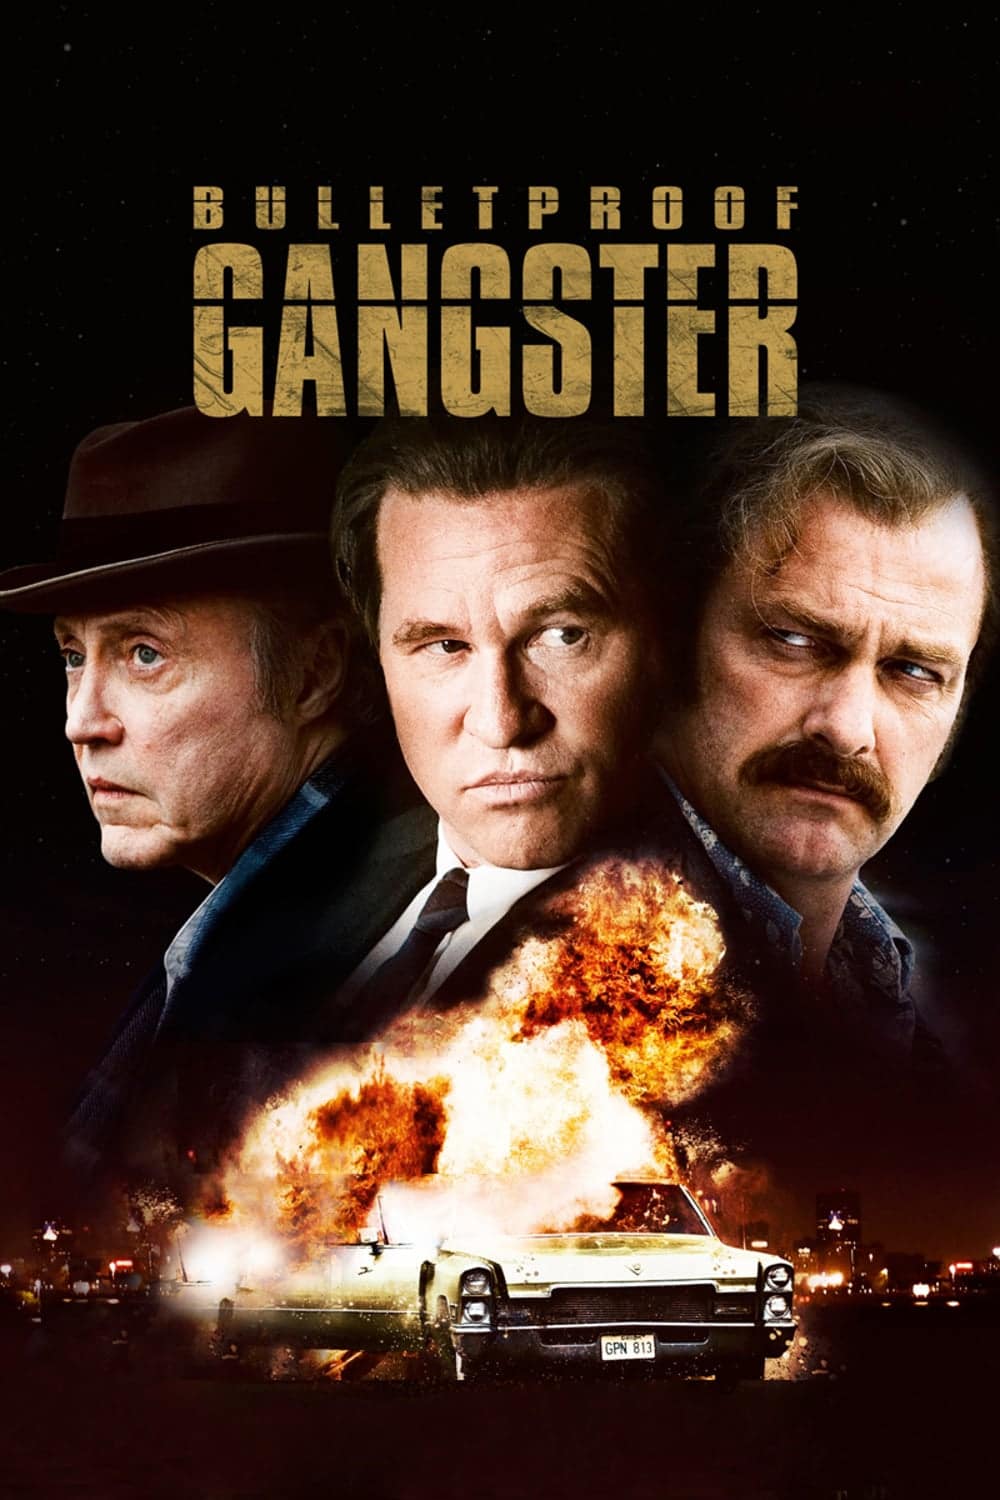 Plakat von "Bulletproof Gangster"